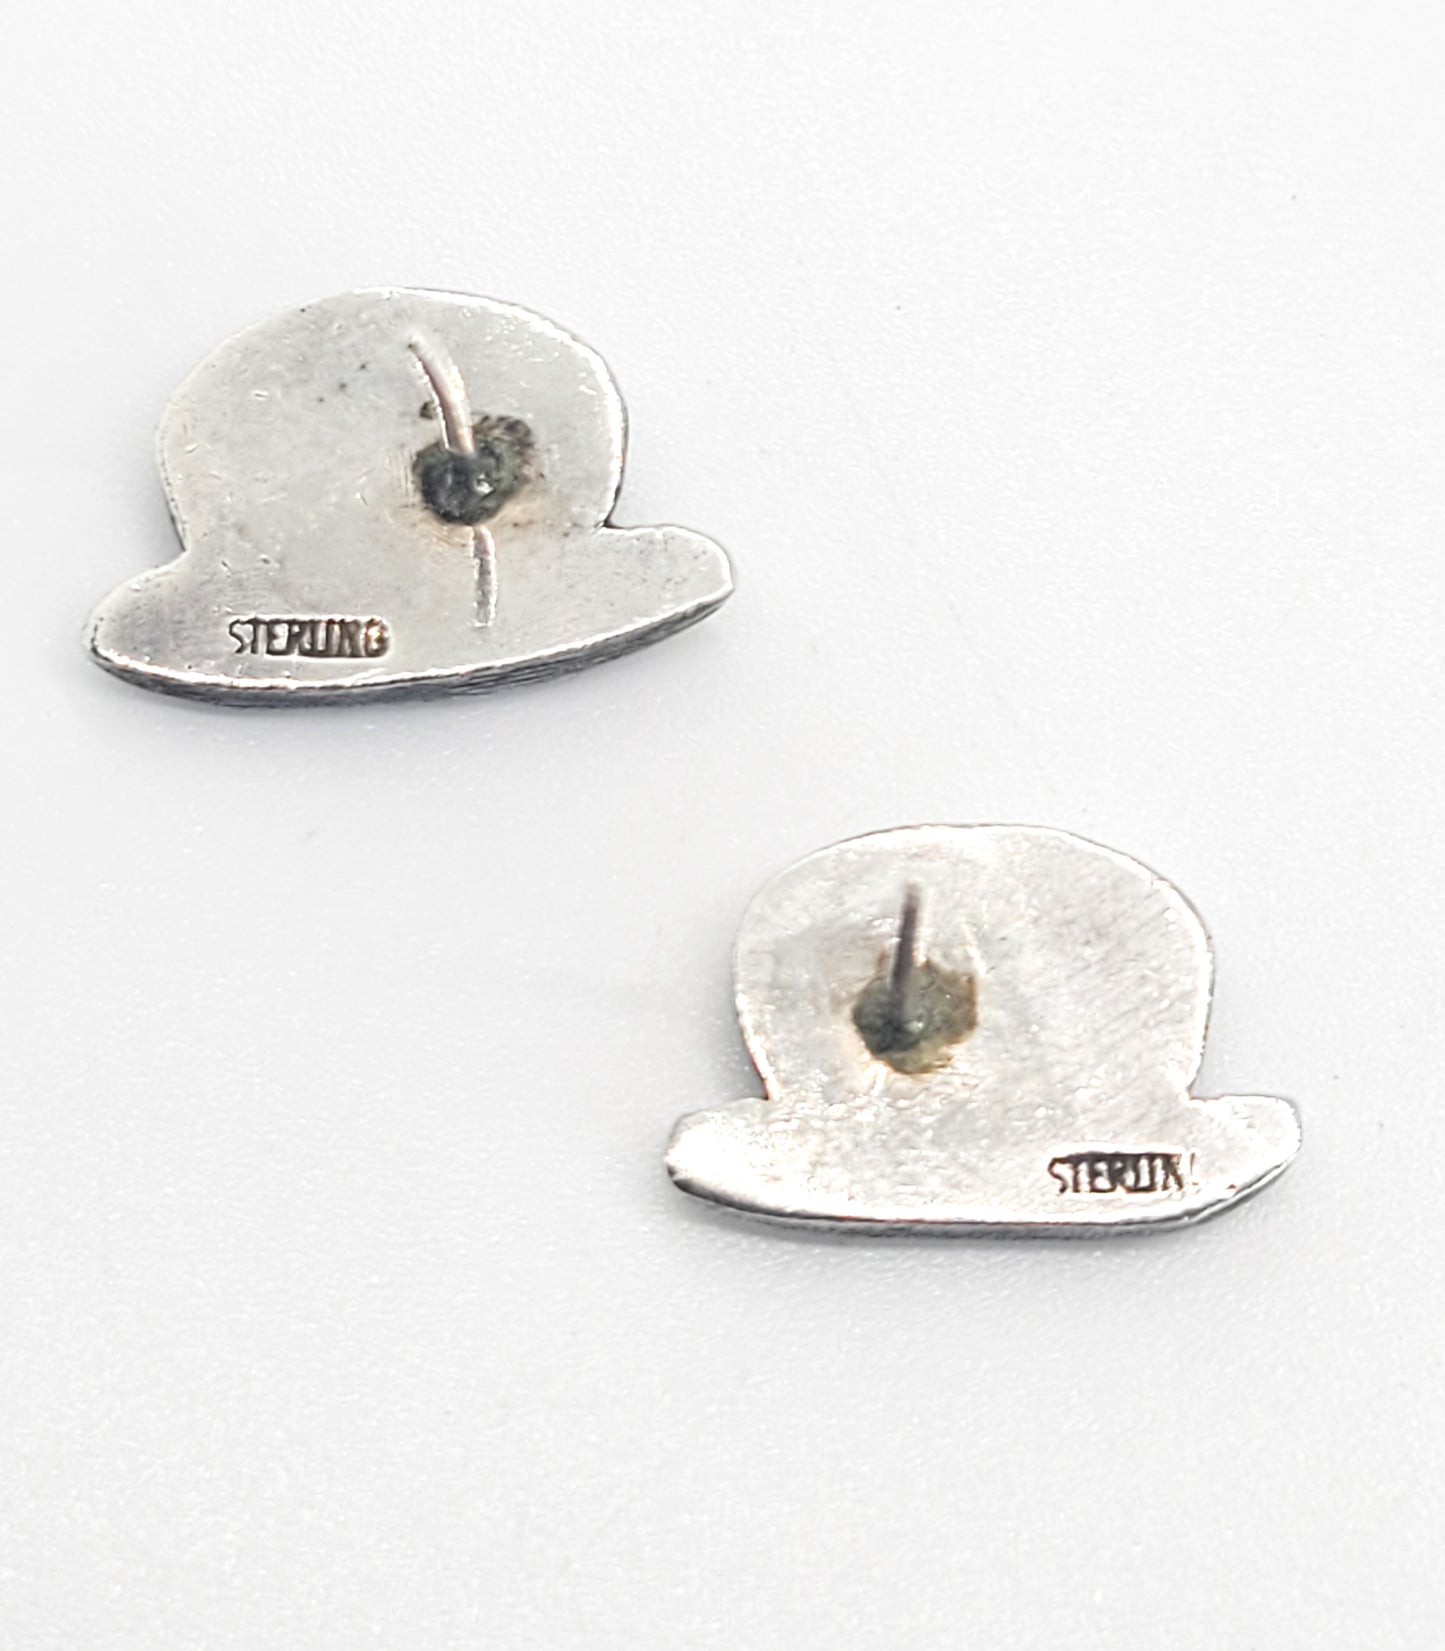 Darby bowler hat vintage detailed sterling silver stud earrings dapper